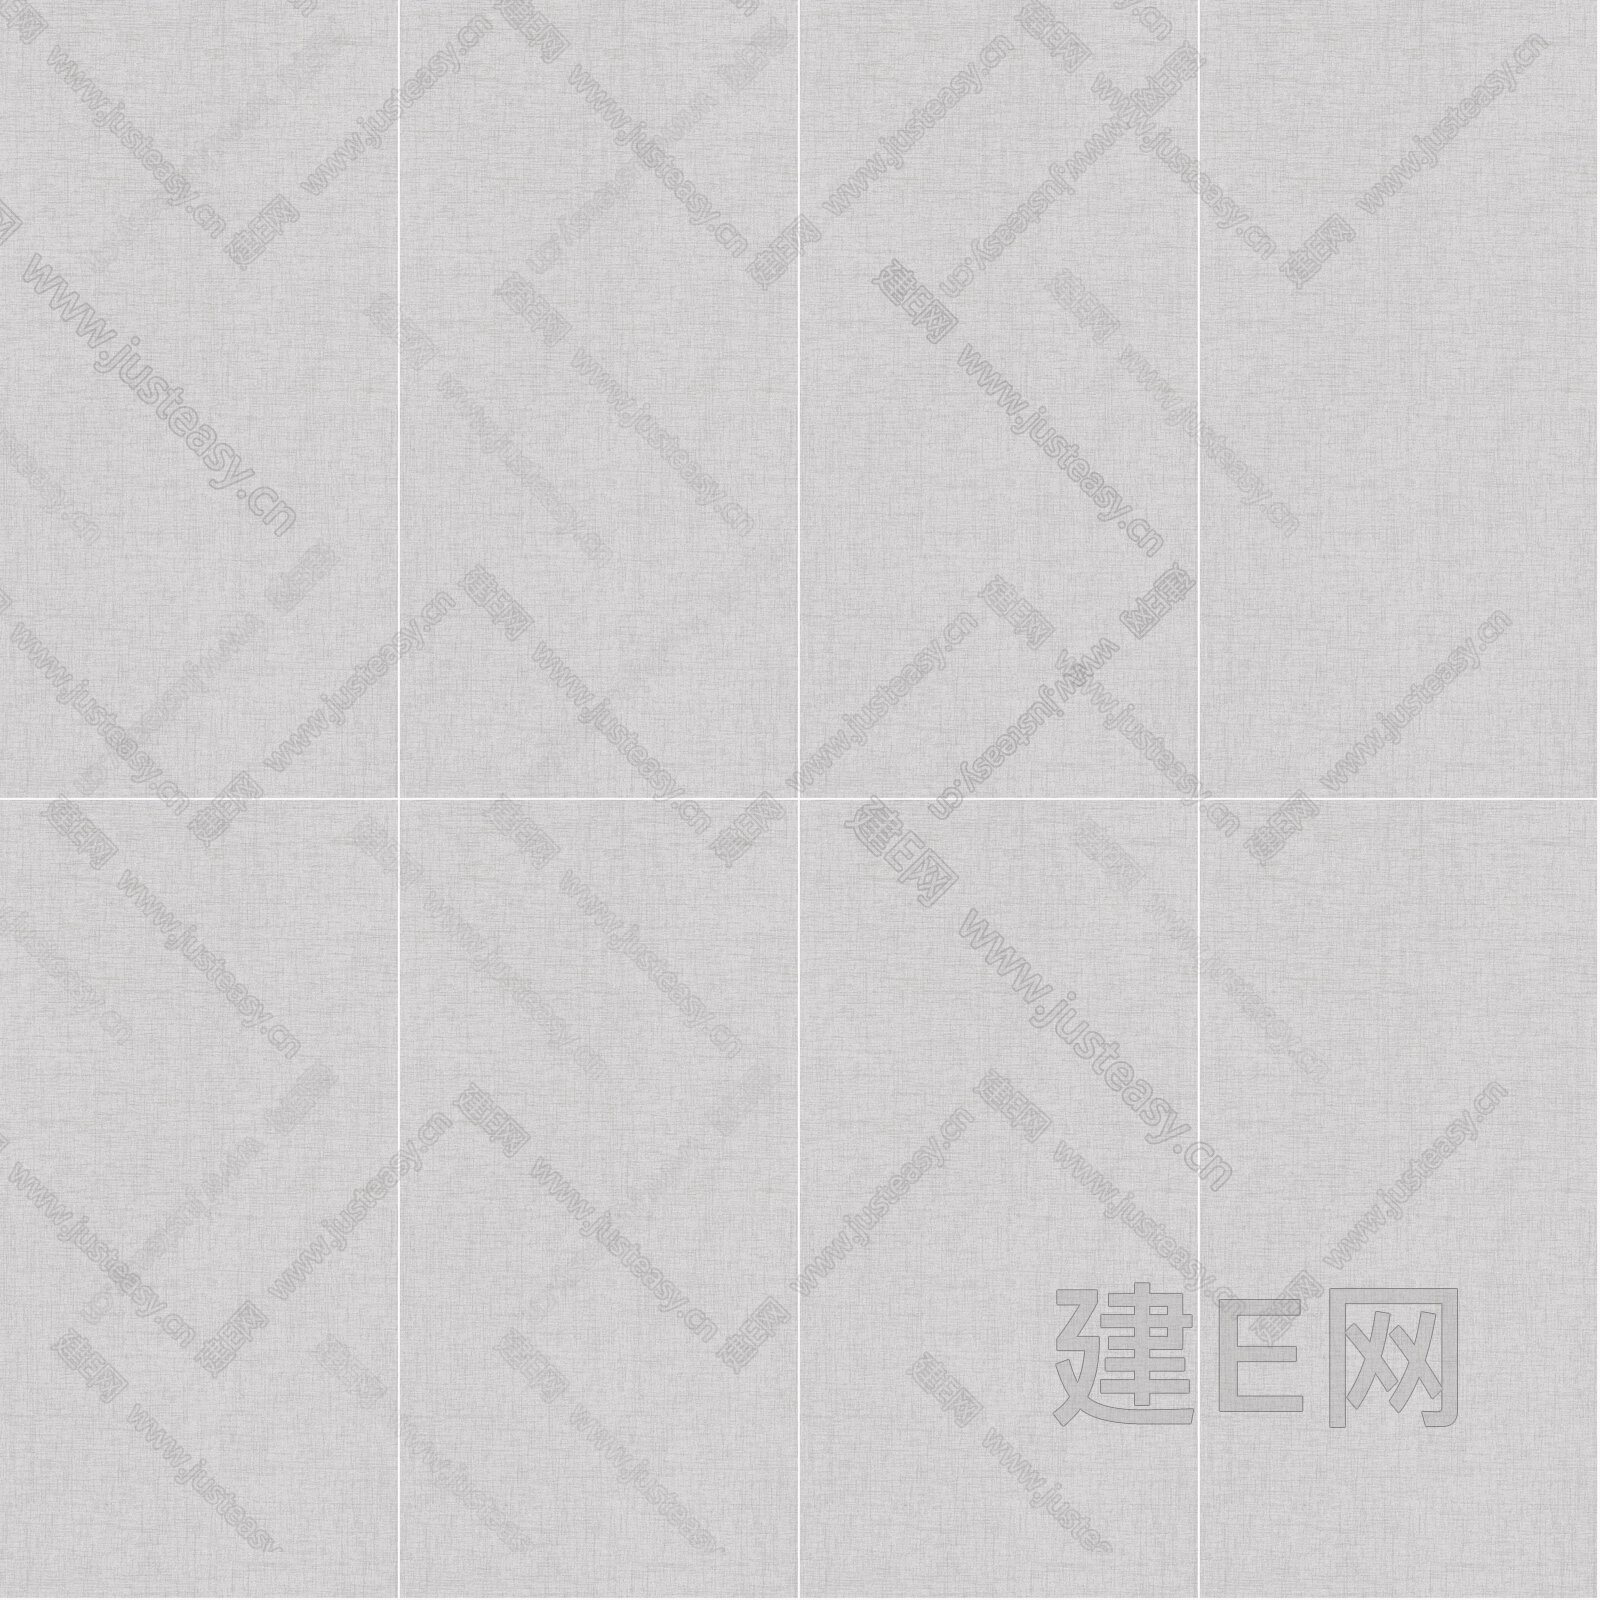 KITO·金意陶雕琢印象布纹砖3d贴图下载[ID:106322800]_建E室内设计网